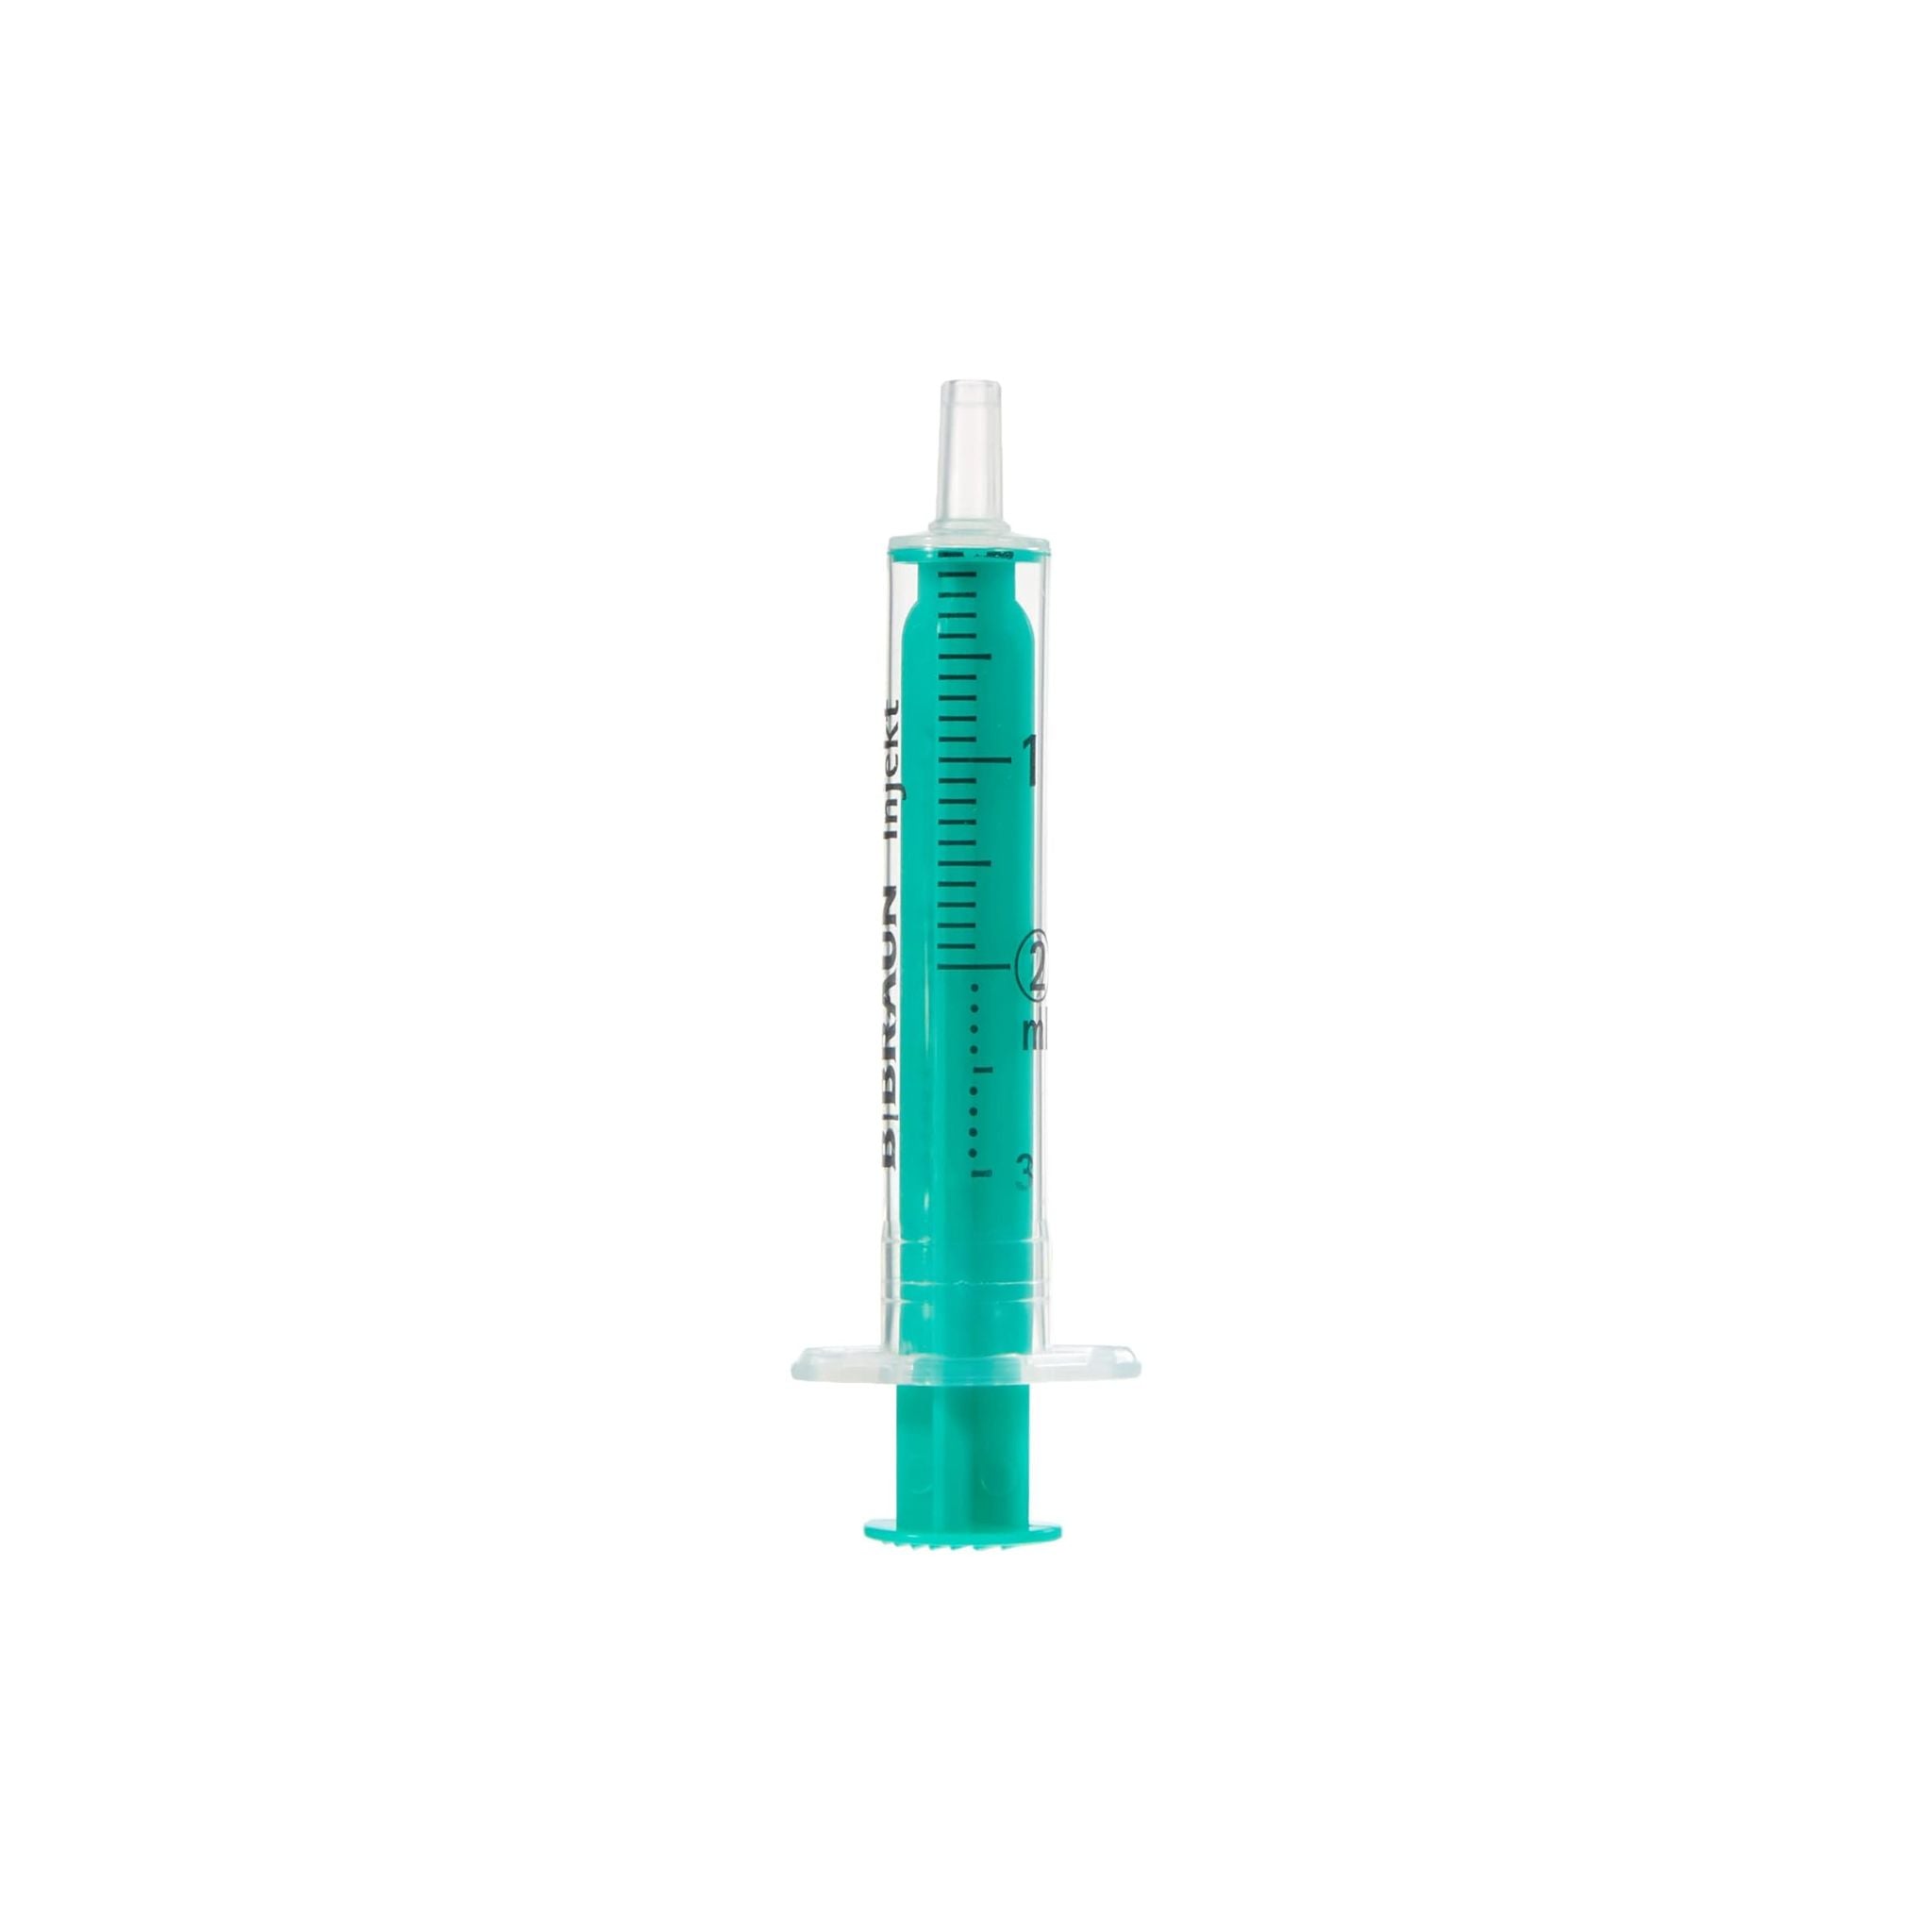 Disposable syringe 2ml